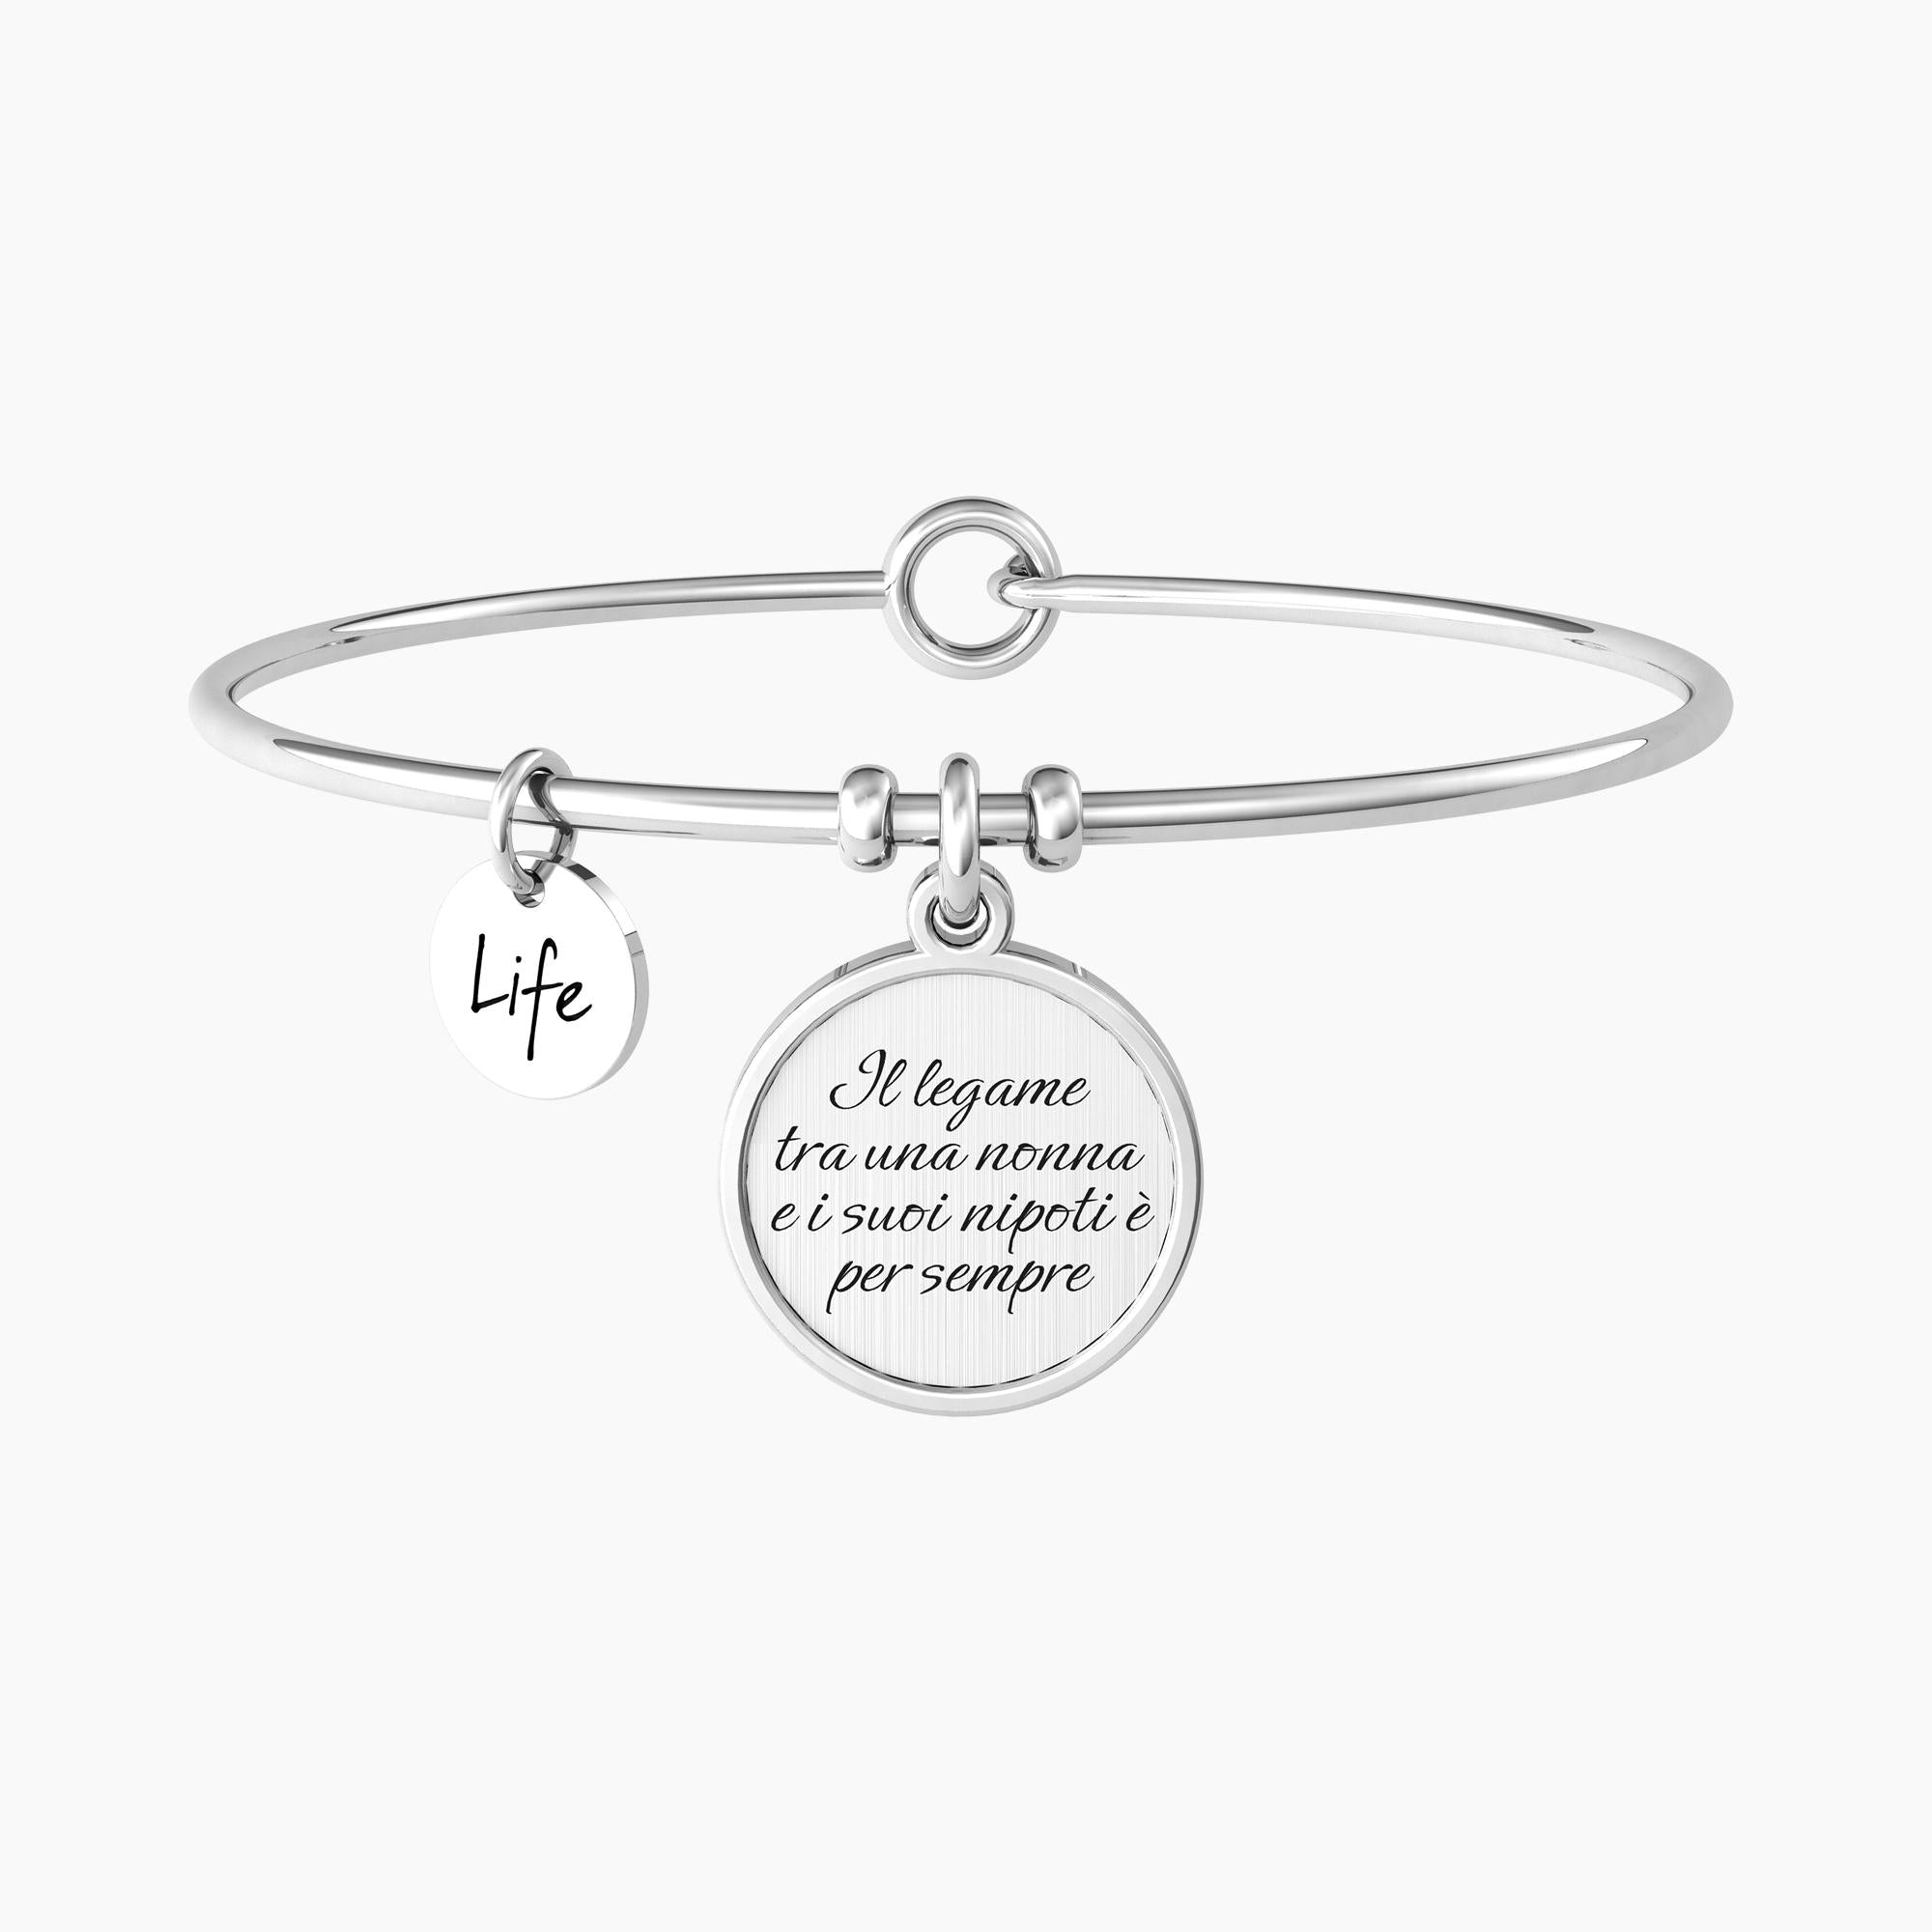 Rigid bracelet for grandmother with round pendant GRANDMOTHER | BOND FOREVER - 732086